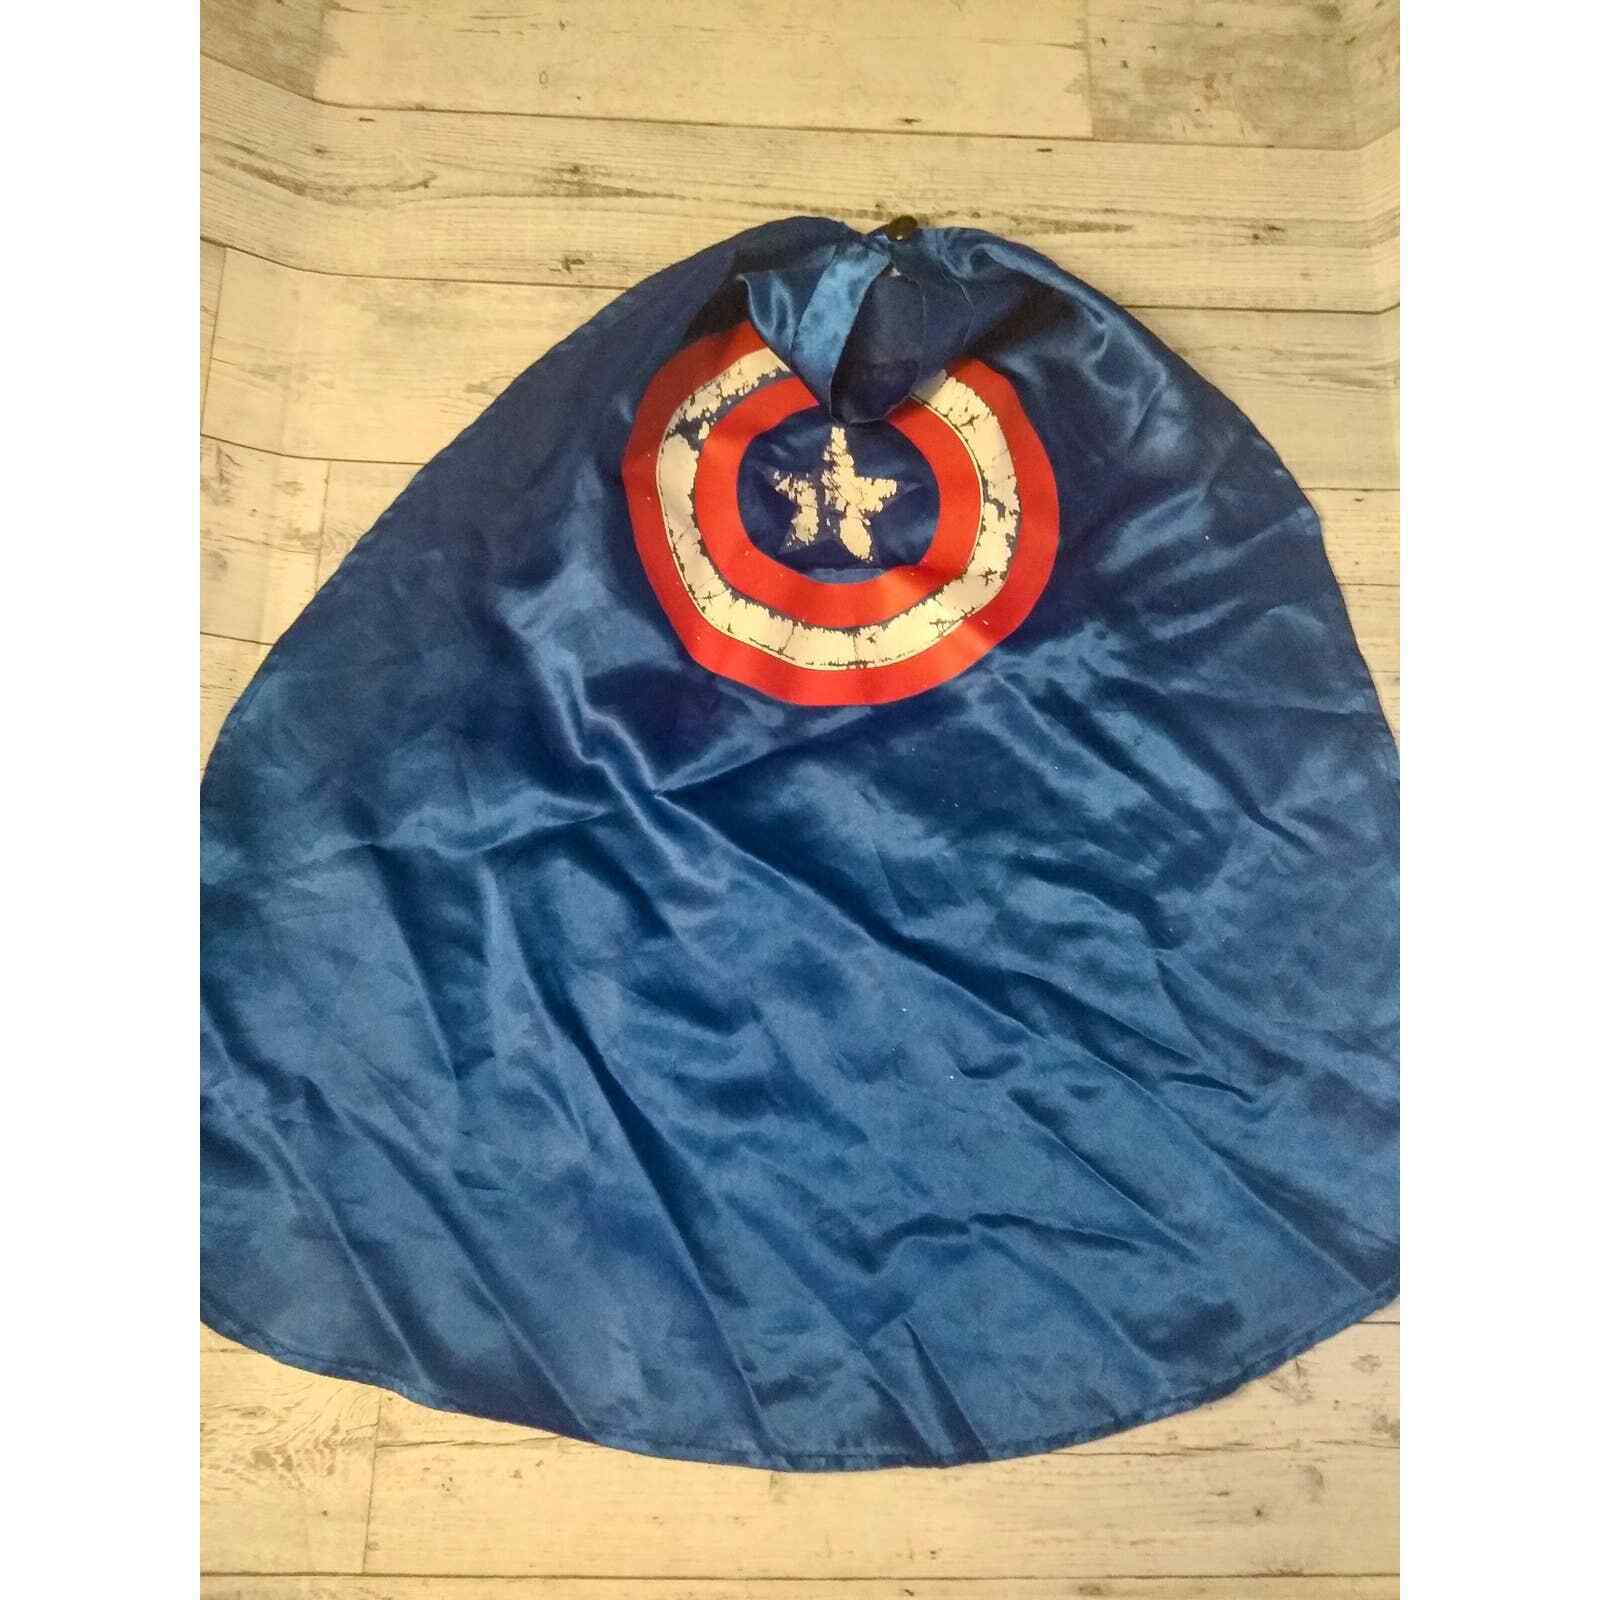 Captain America Cape Halloween Costumes